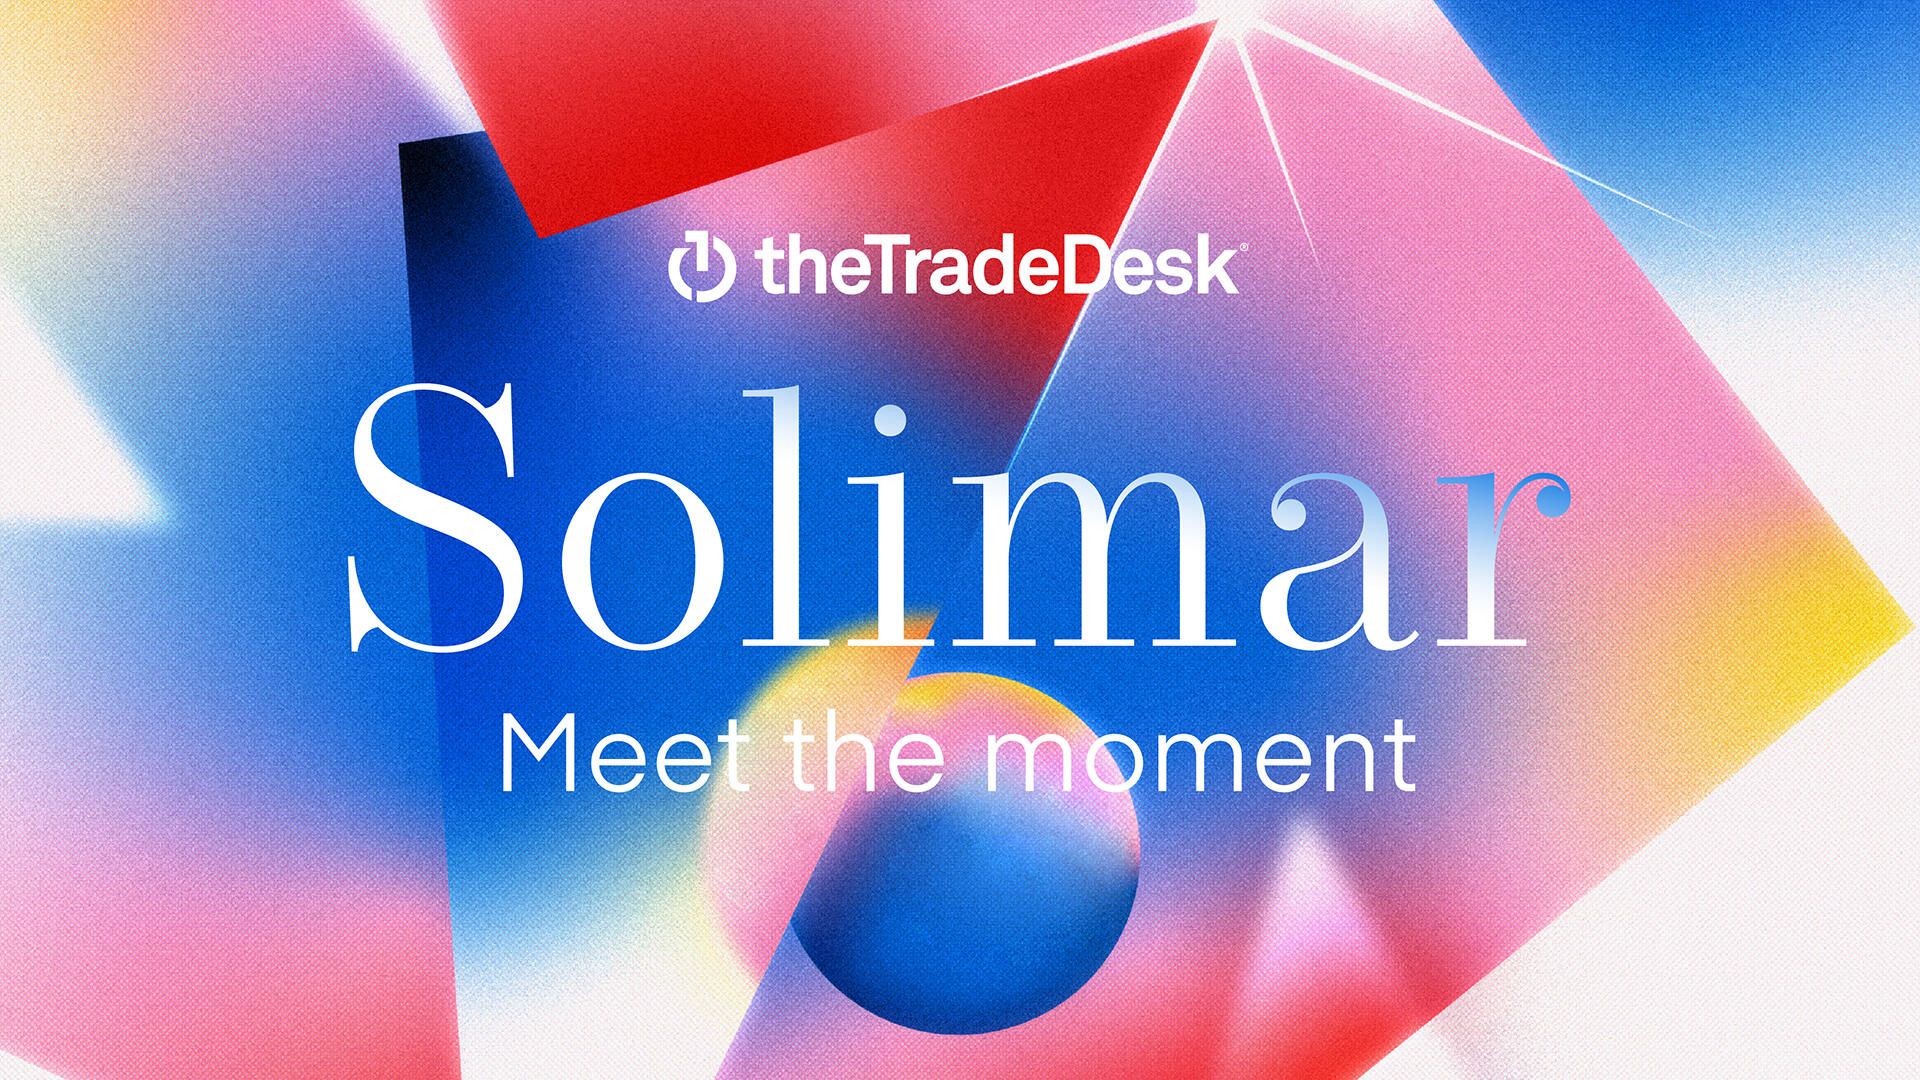 The Trade Desk updates its trading platform